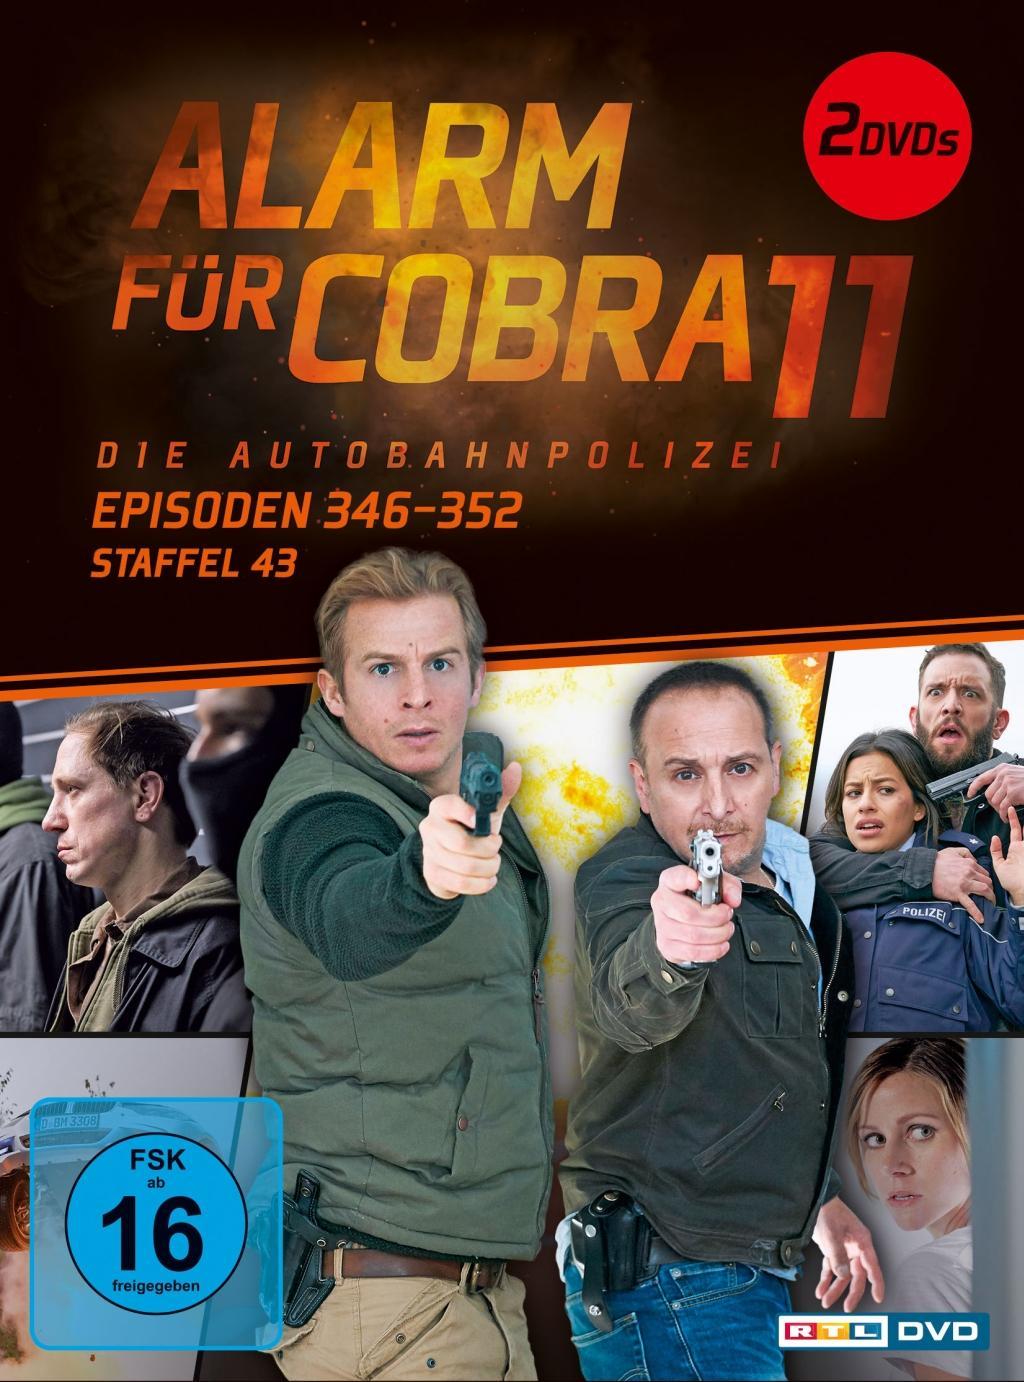 Video Alarm für Cobra 11 - Staffel 43 Hermann Joha